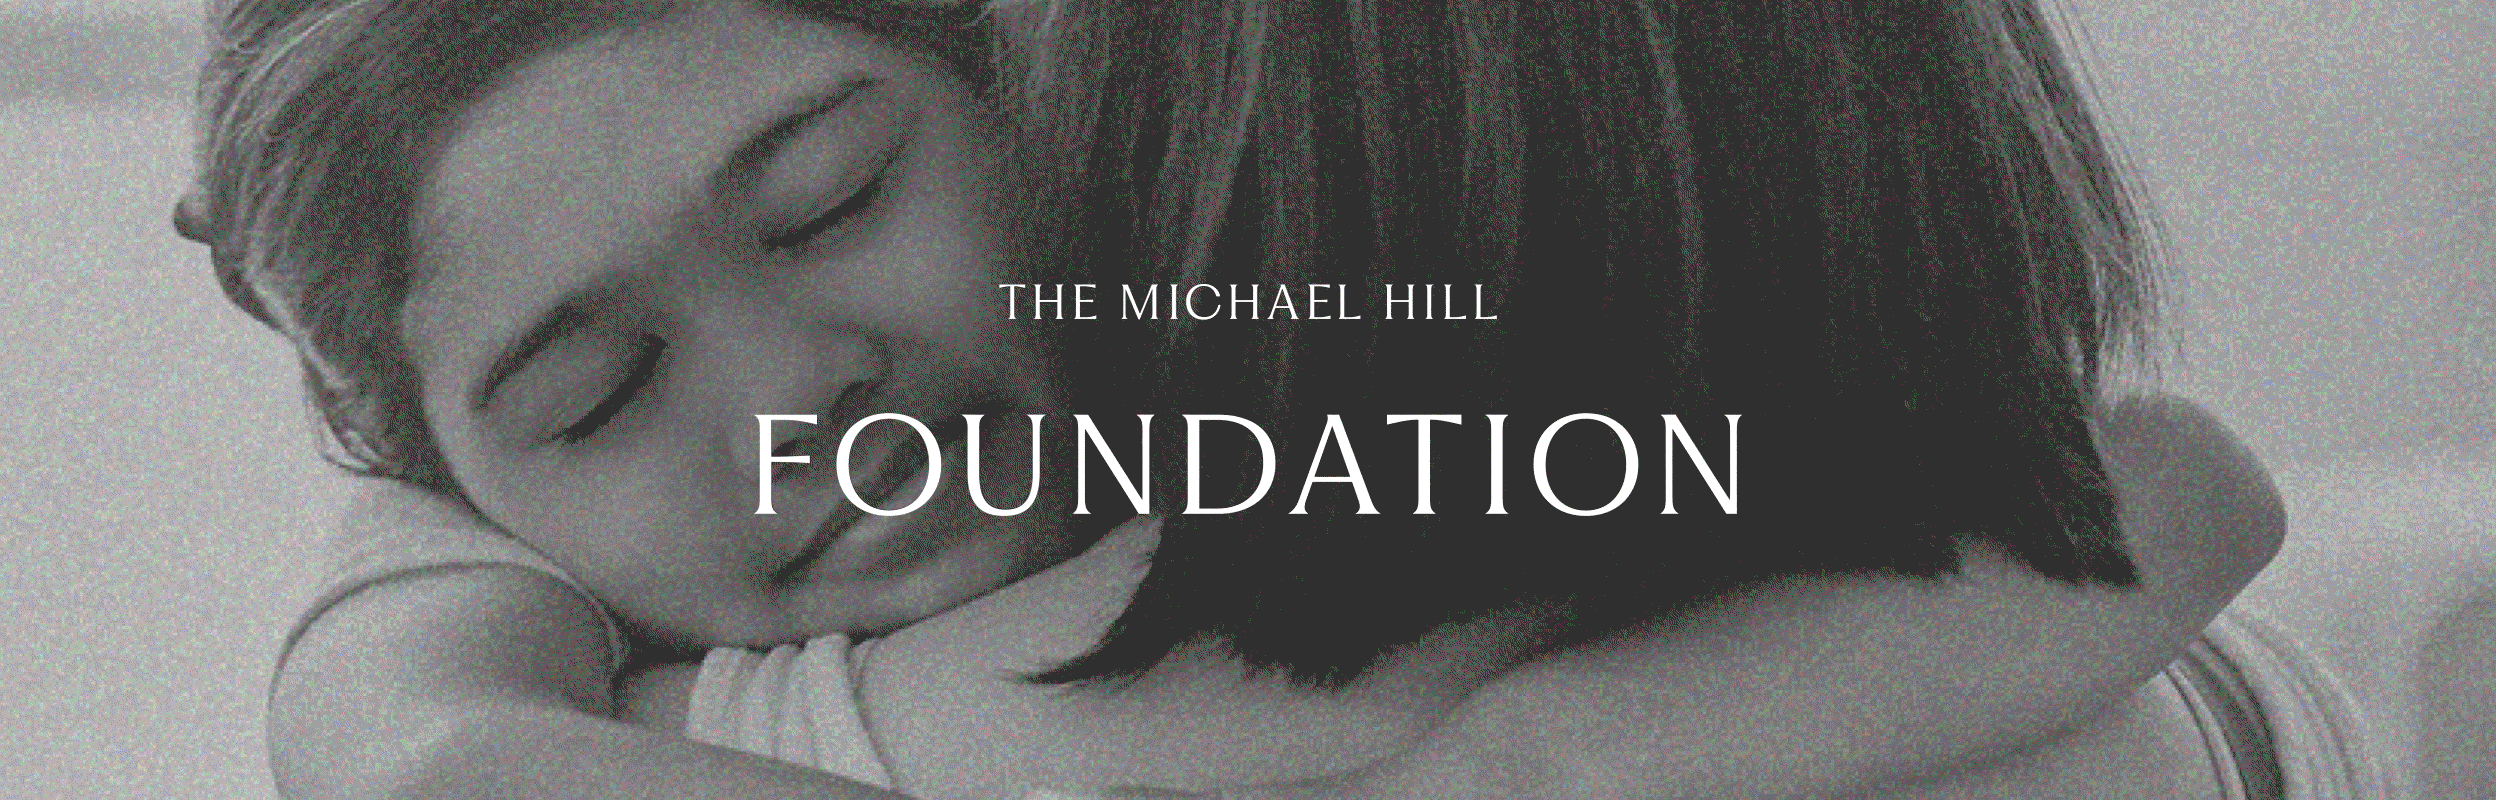 Image - Sustainability - Michael Hill Foundation - HERO